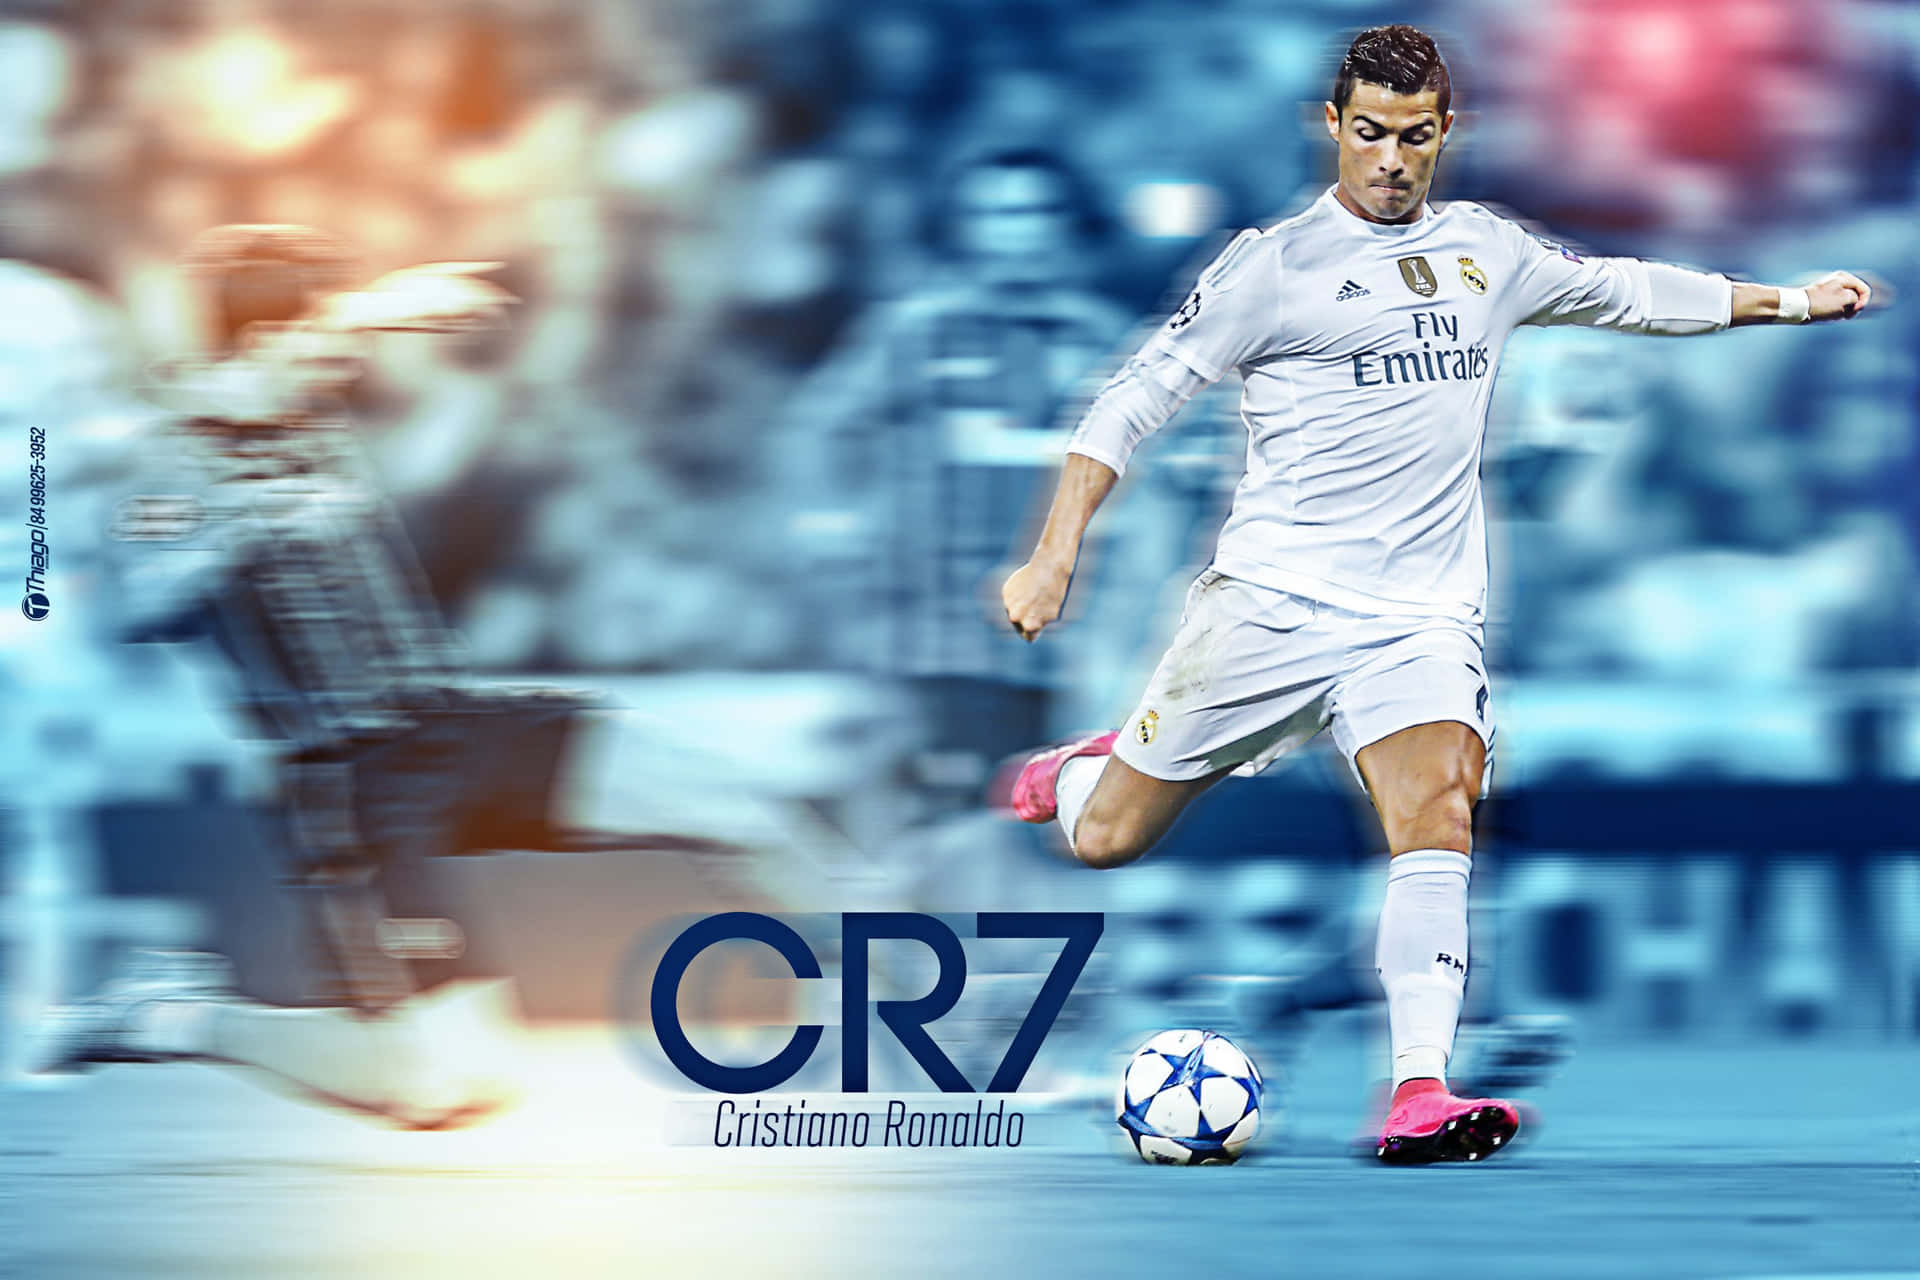 Soccer star Cristiano Ronaldo on the ball.